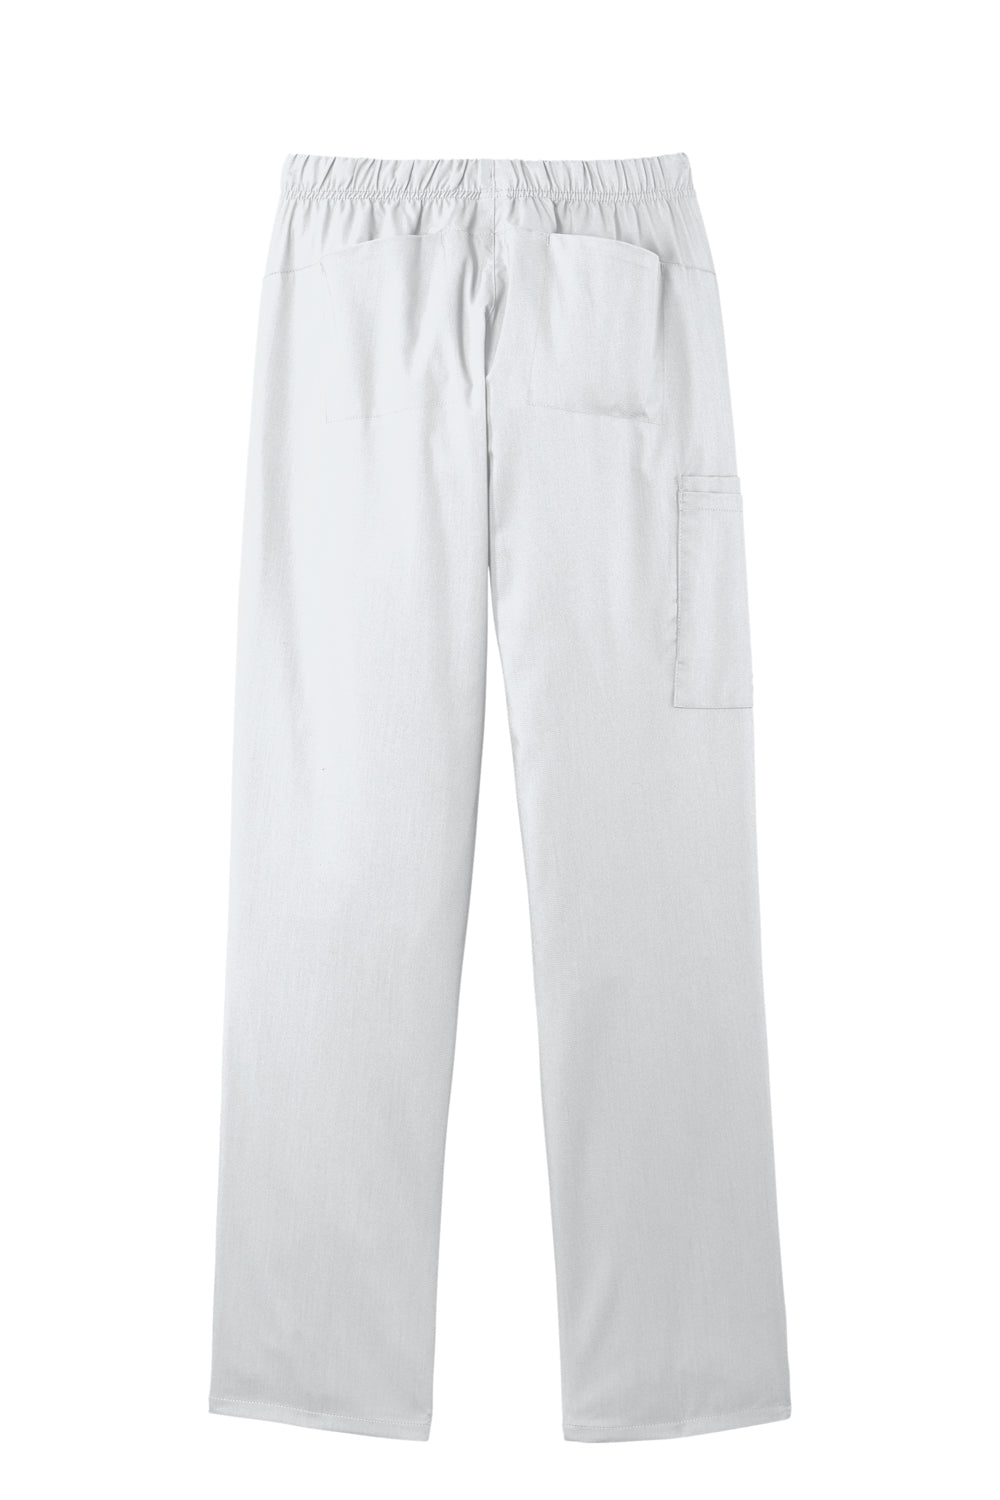 Wonderwink WW4158 Premiere Flex Cargo Pants w/ Pockets White Flat Back